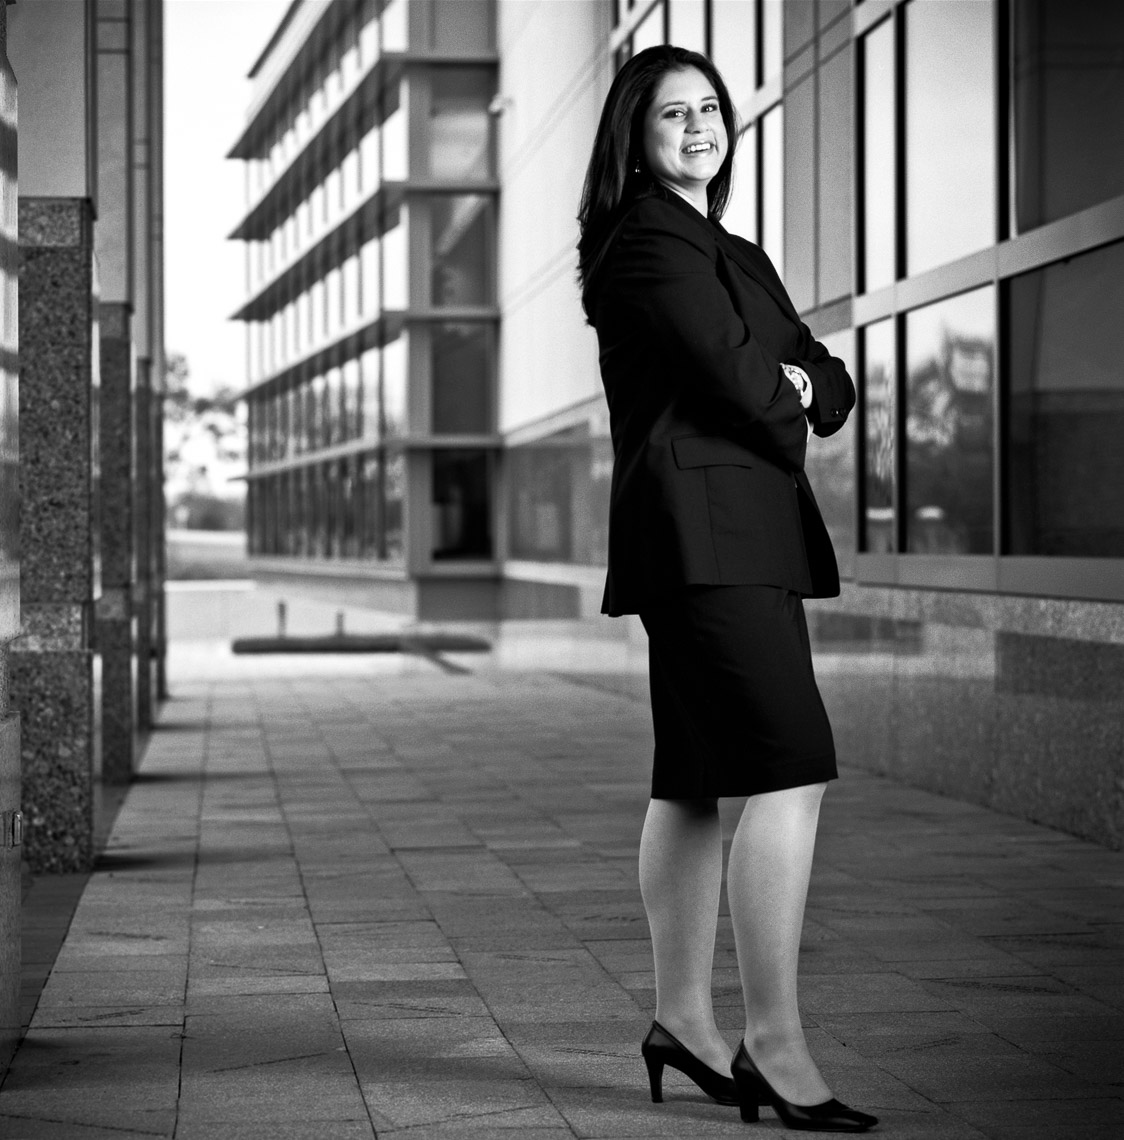 Cristina Candia Lopez - National Society of Hispanic MBAs 